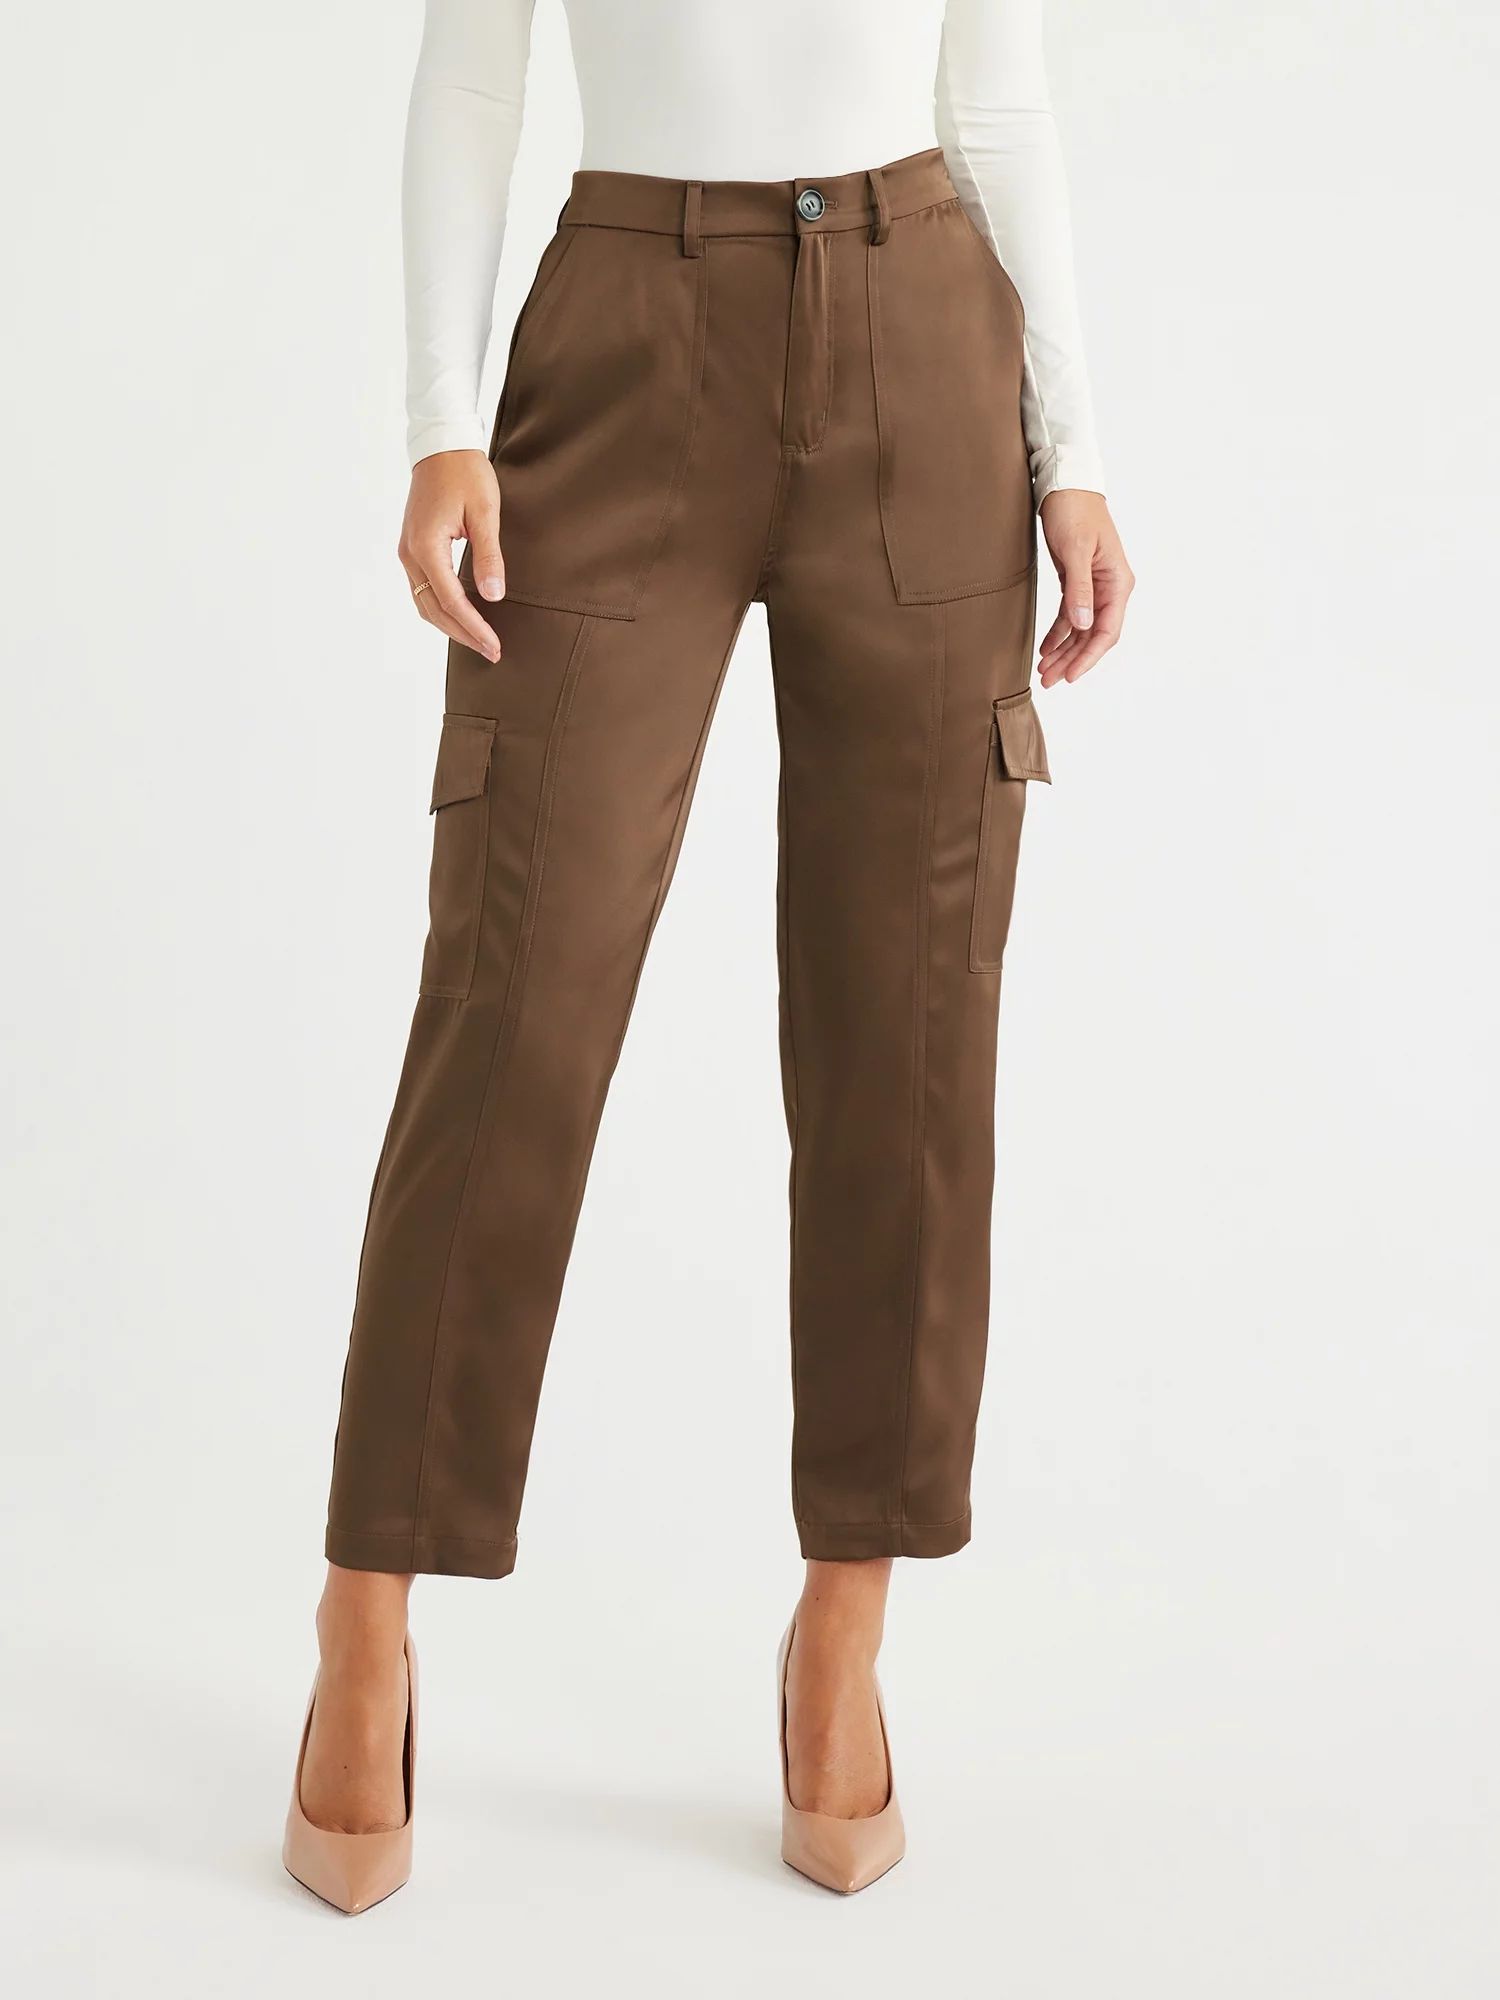 Sofia Jeans Women's High Rise Satin Cargo Pants, 27" Inseam, Sizes 00-22 | Walmart (US)